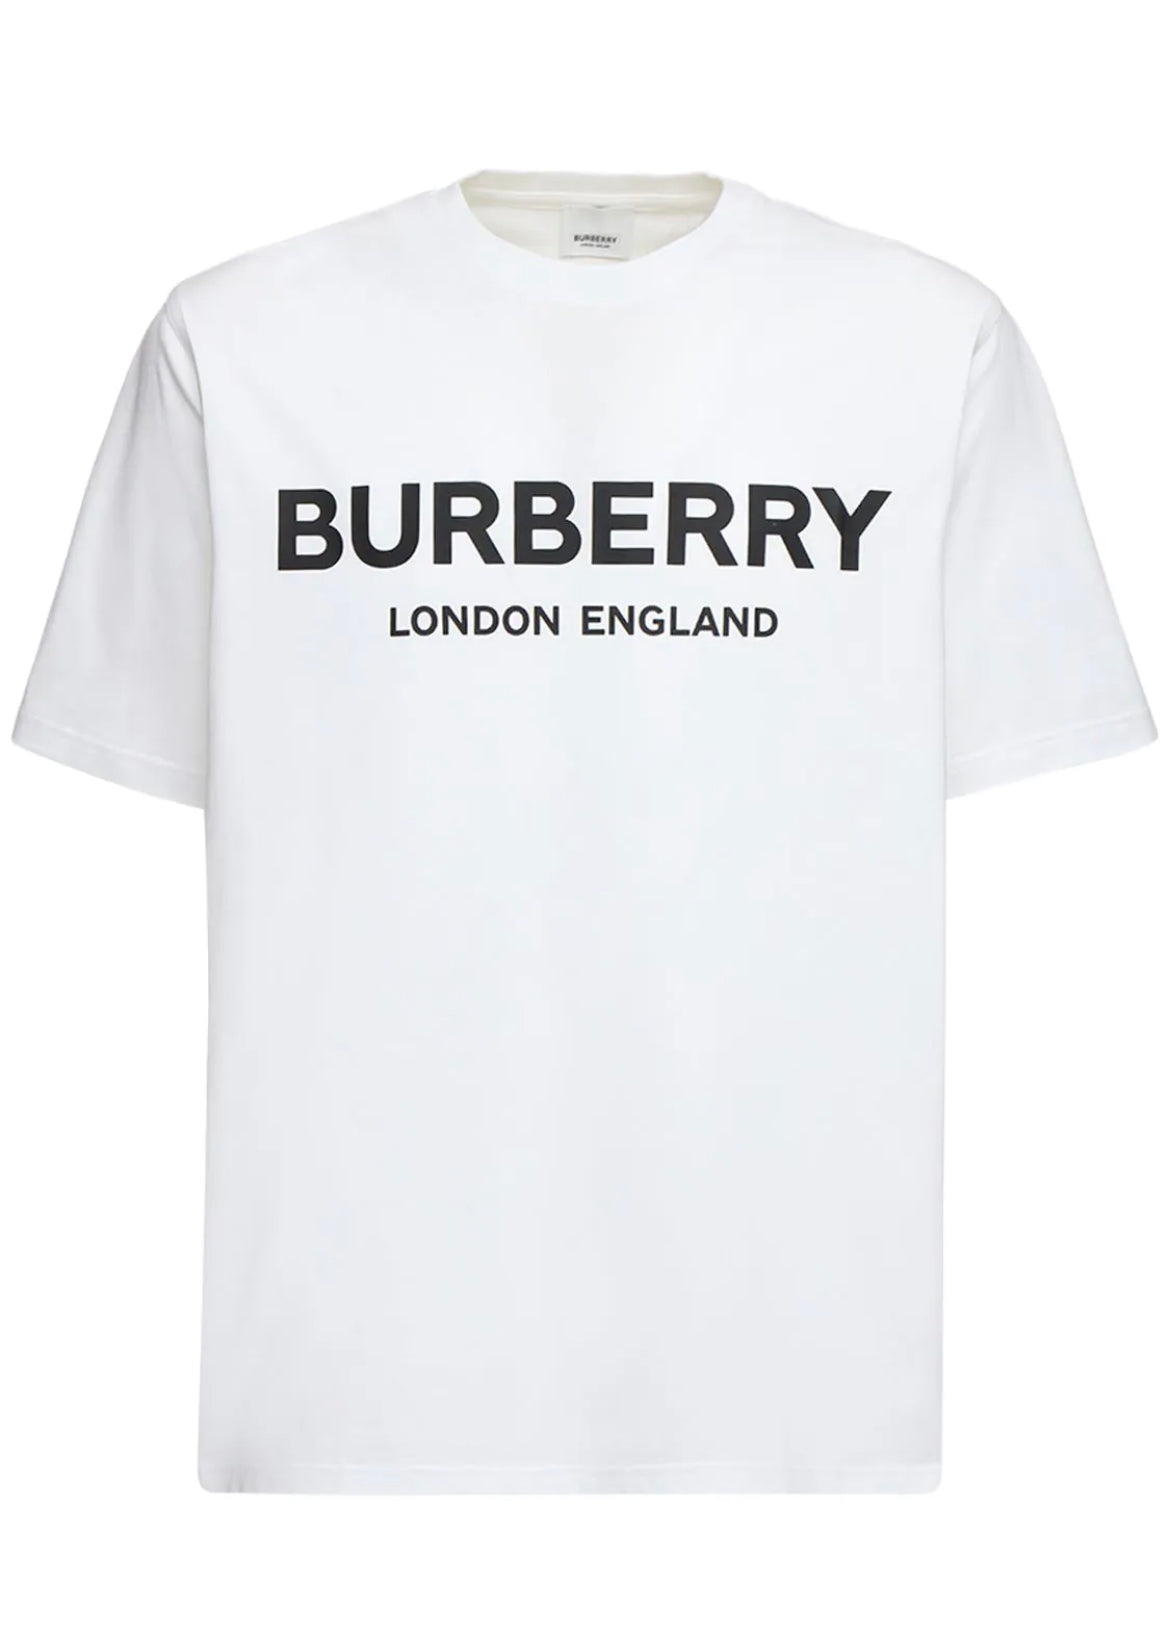 BURBERRY LONDON ENGLAND LETCHFORD LOGO TSHIRT - WHITE – SGN CLOTHING